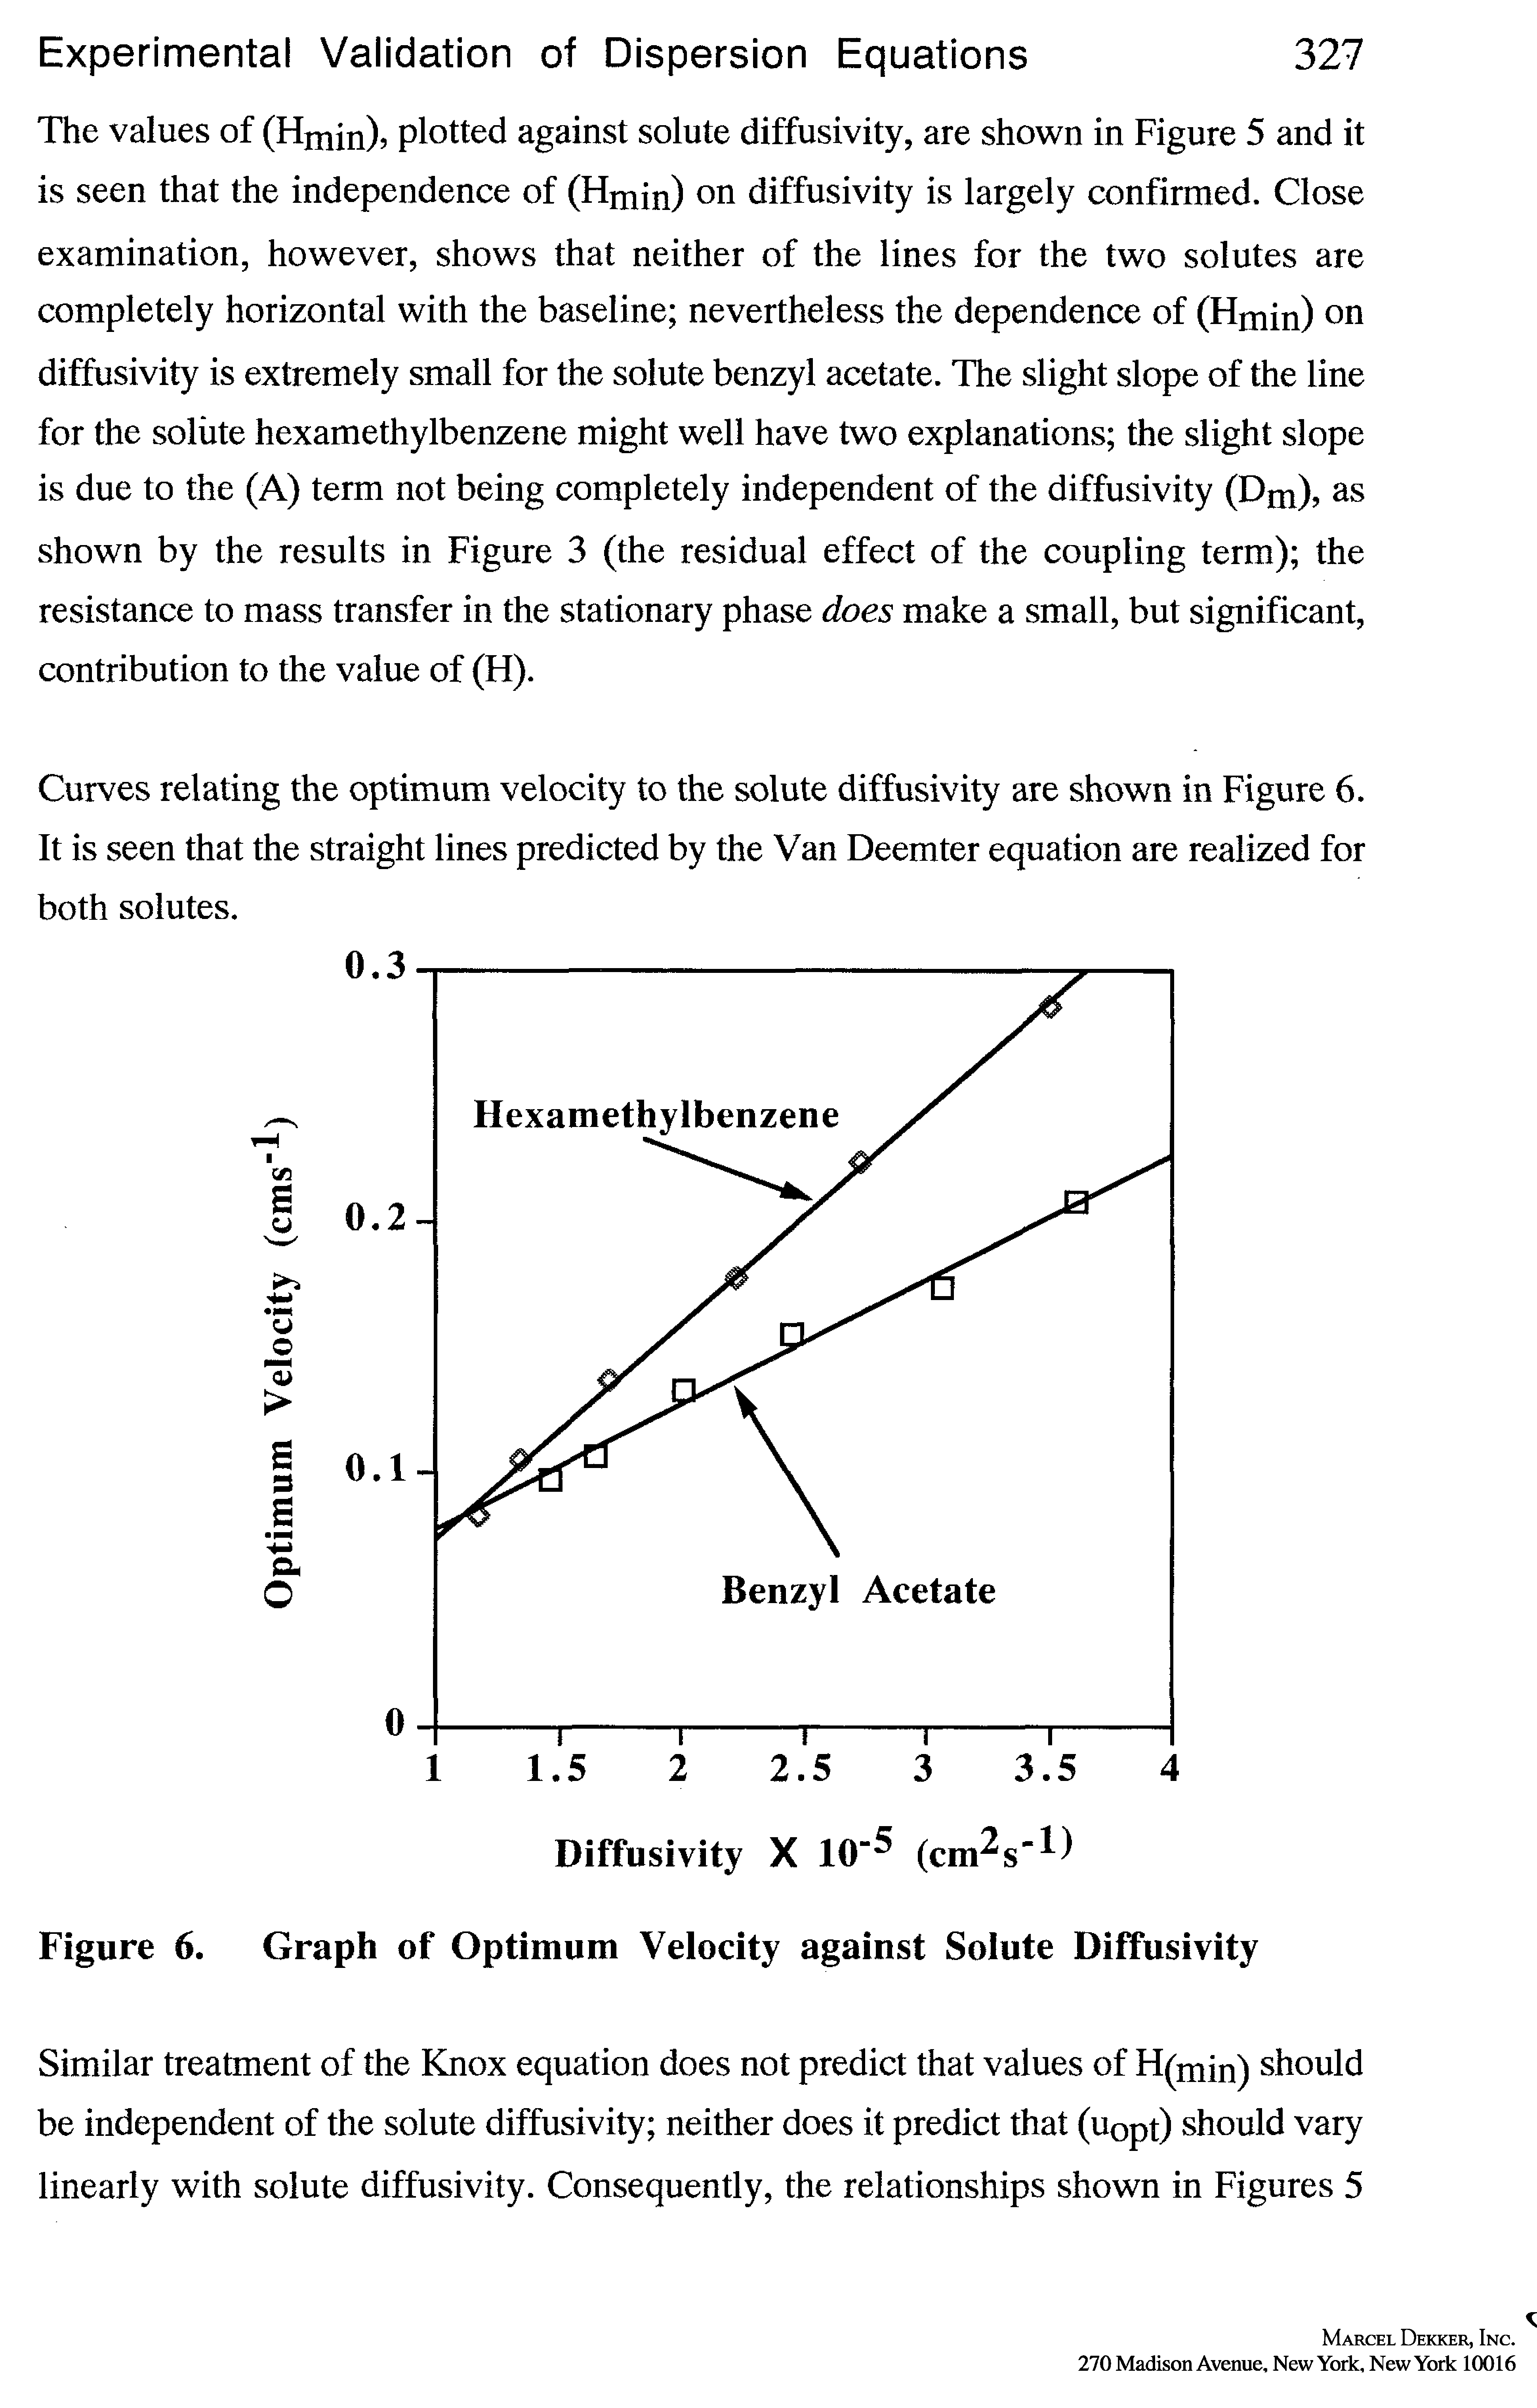 Figure 6. Graph of Optimum Velocity against Solute Diffusivity...